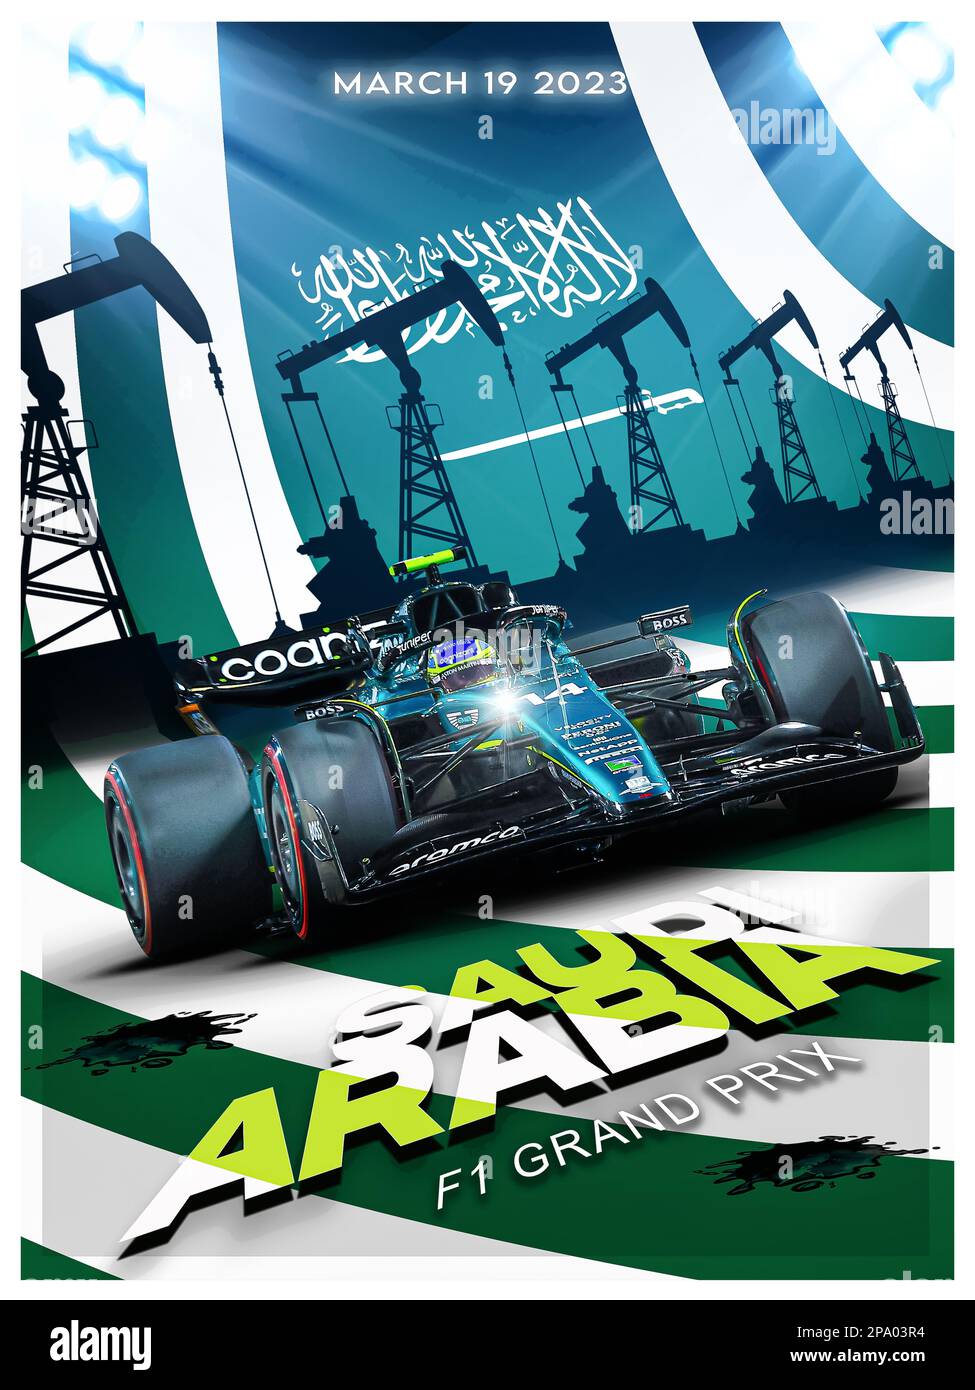 Saudi Arabia F1 Grand Prix 2023 Stock Photo